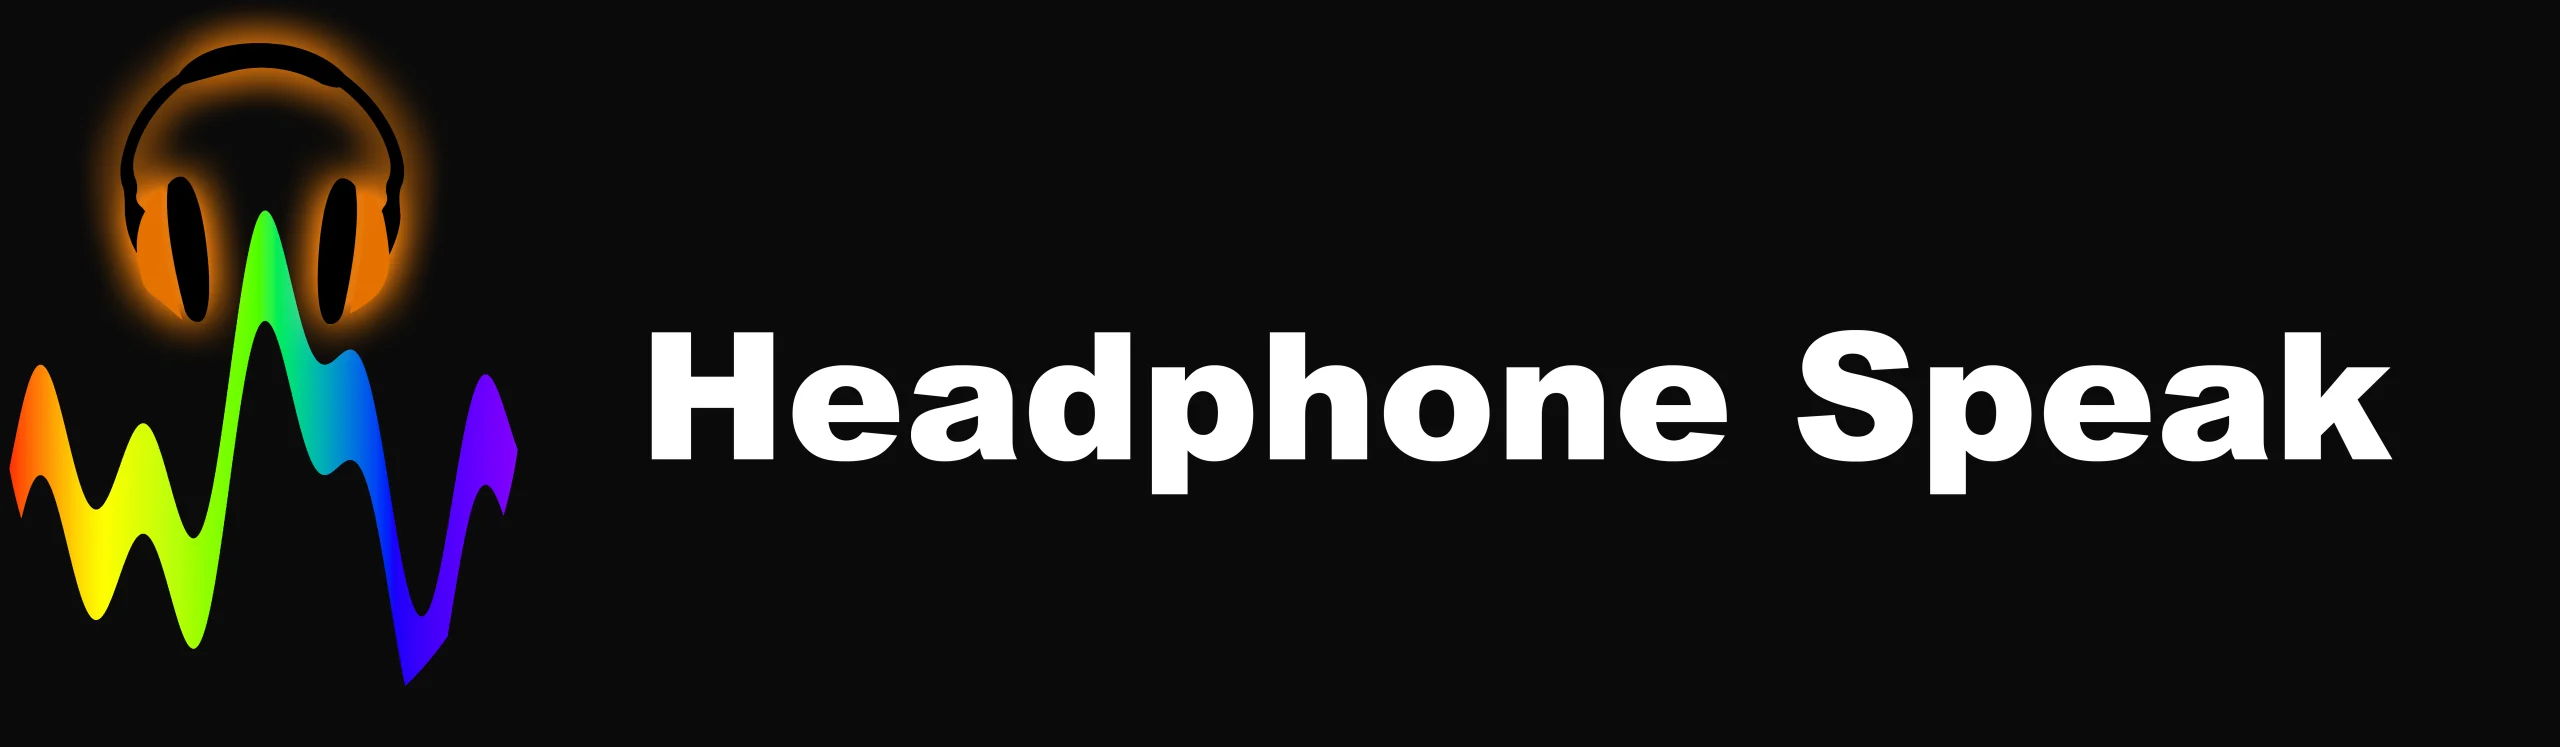 Headphone Speak